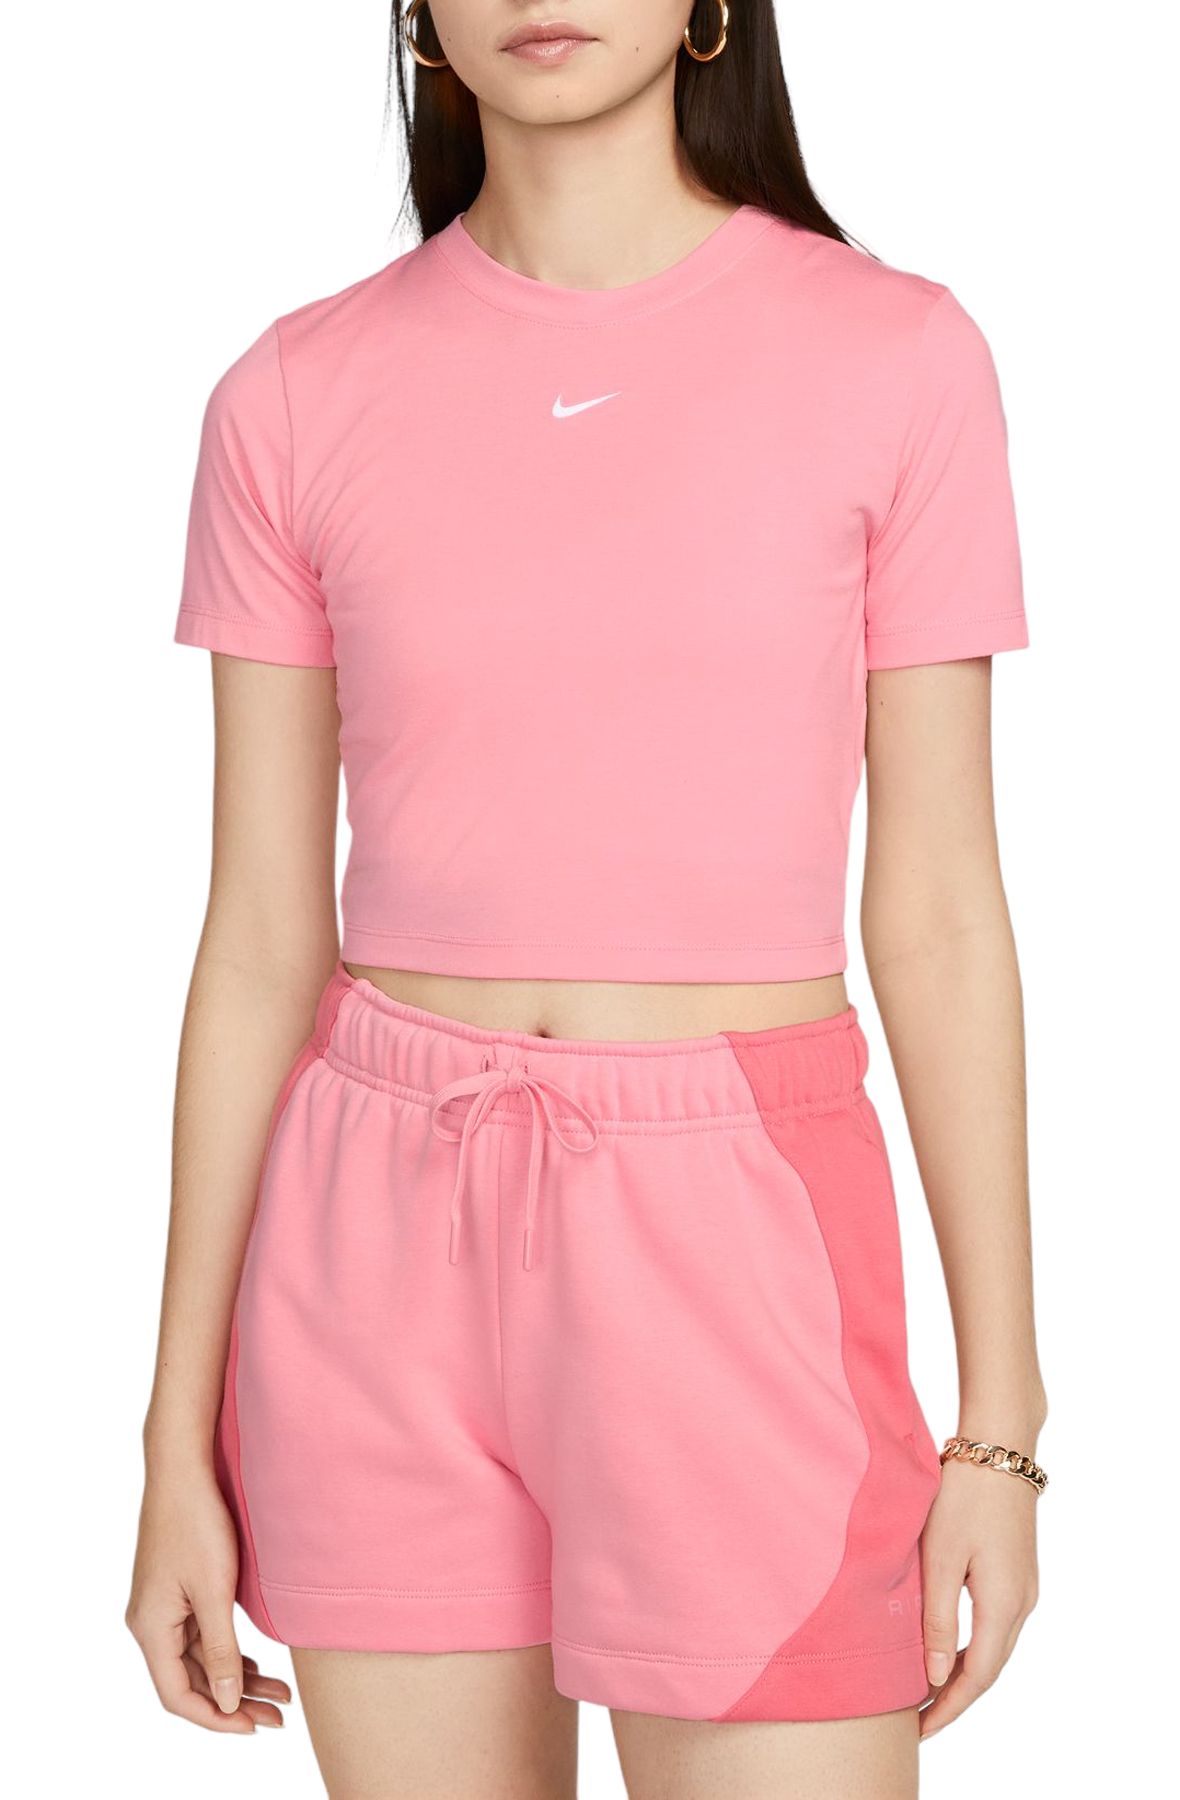 Doe een poging Republiek commentaar NIKE Sportswear Essential Slim-Fit Cropped T-Shirt FB2873 611 - Shiekh